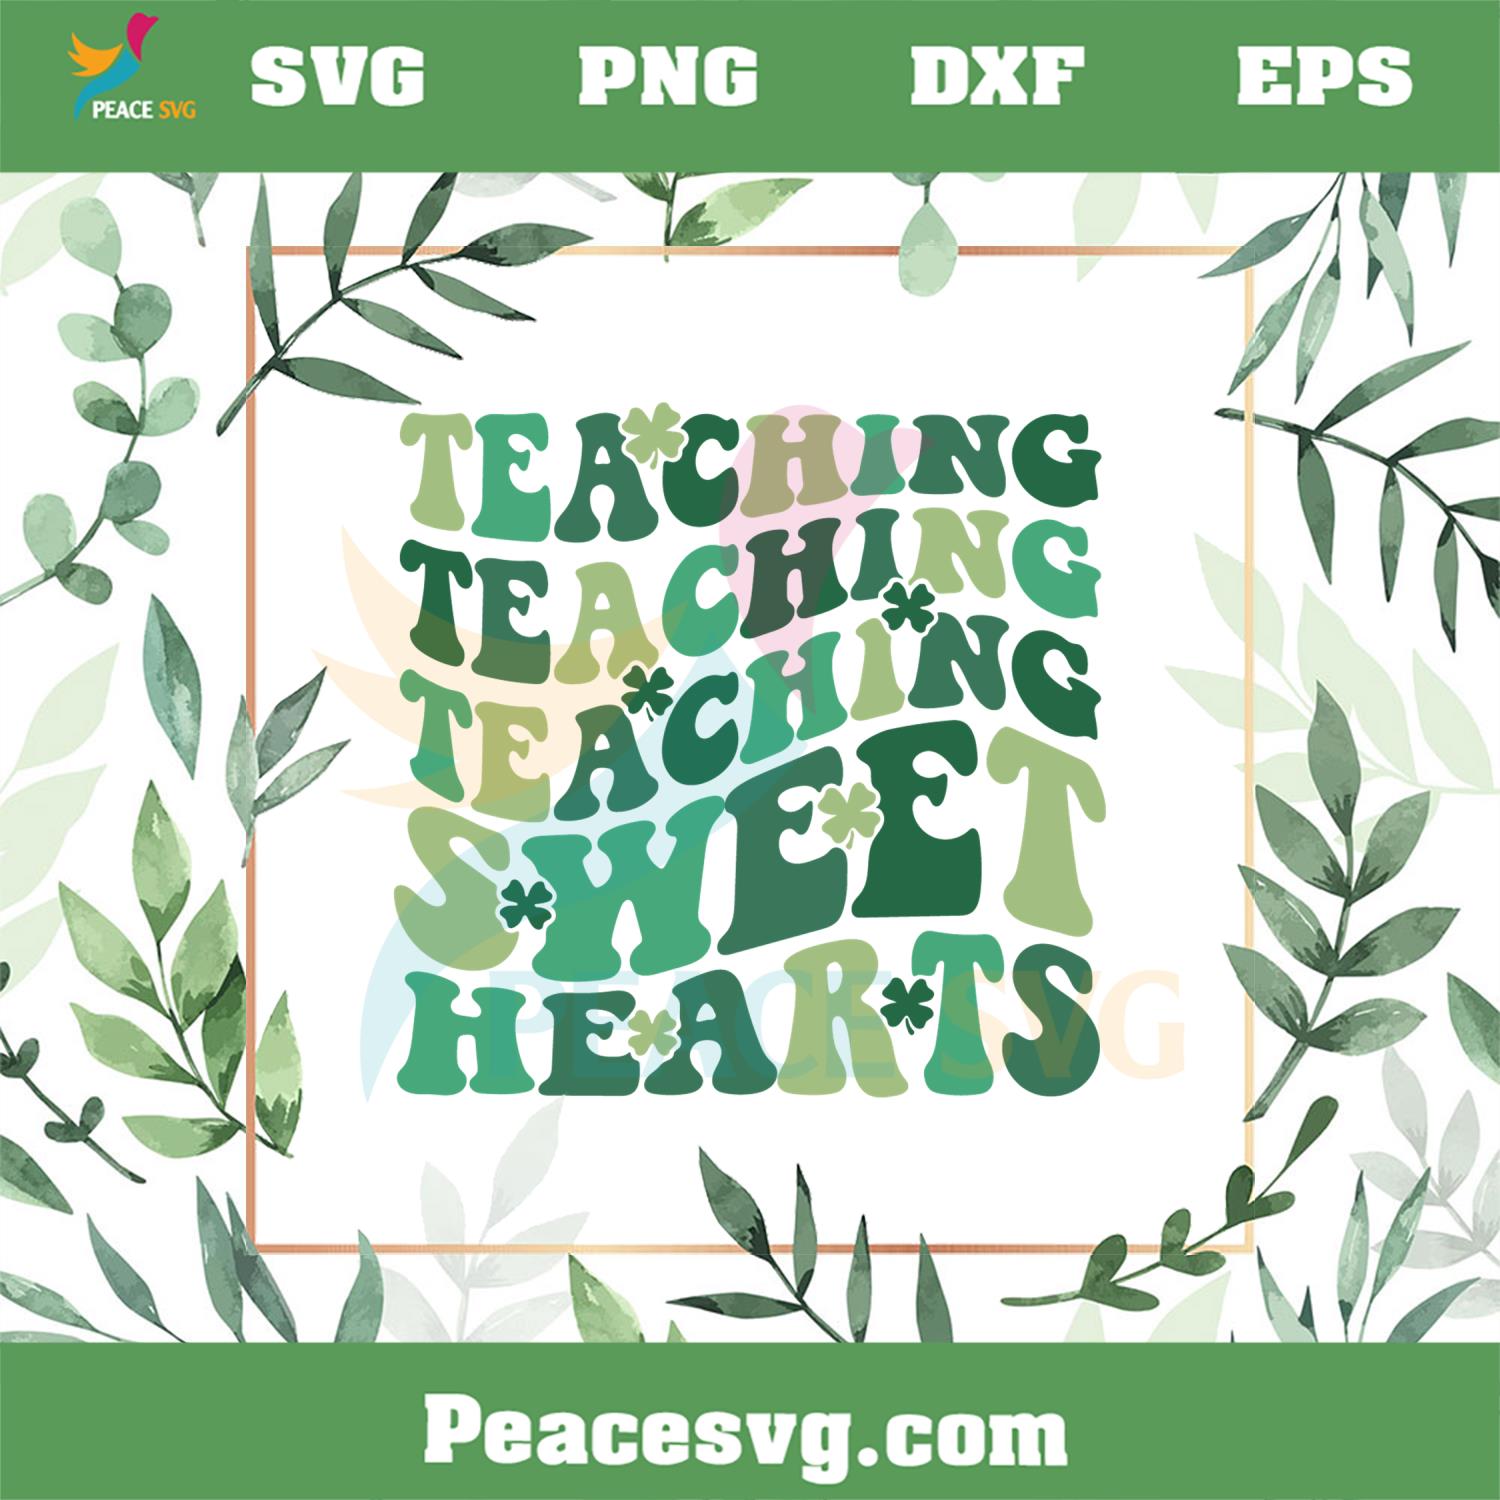 St Patrick’s Day Teacher Teaching Sweet Hearts SVG Cutting Files